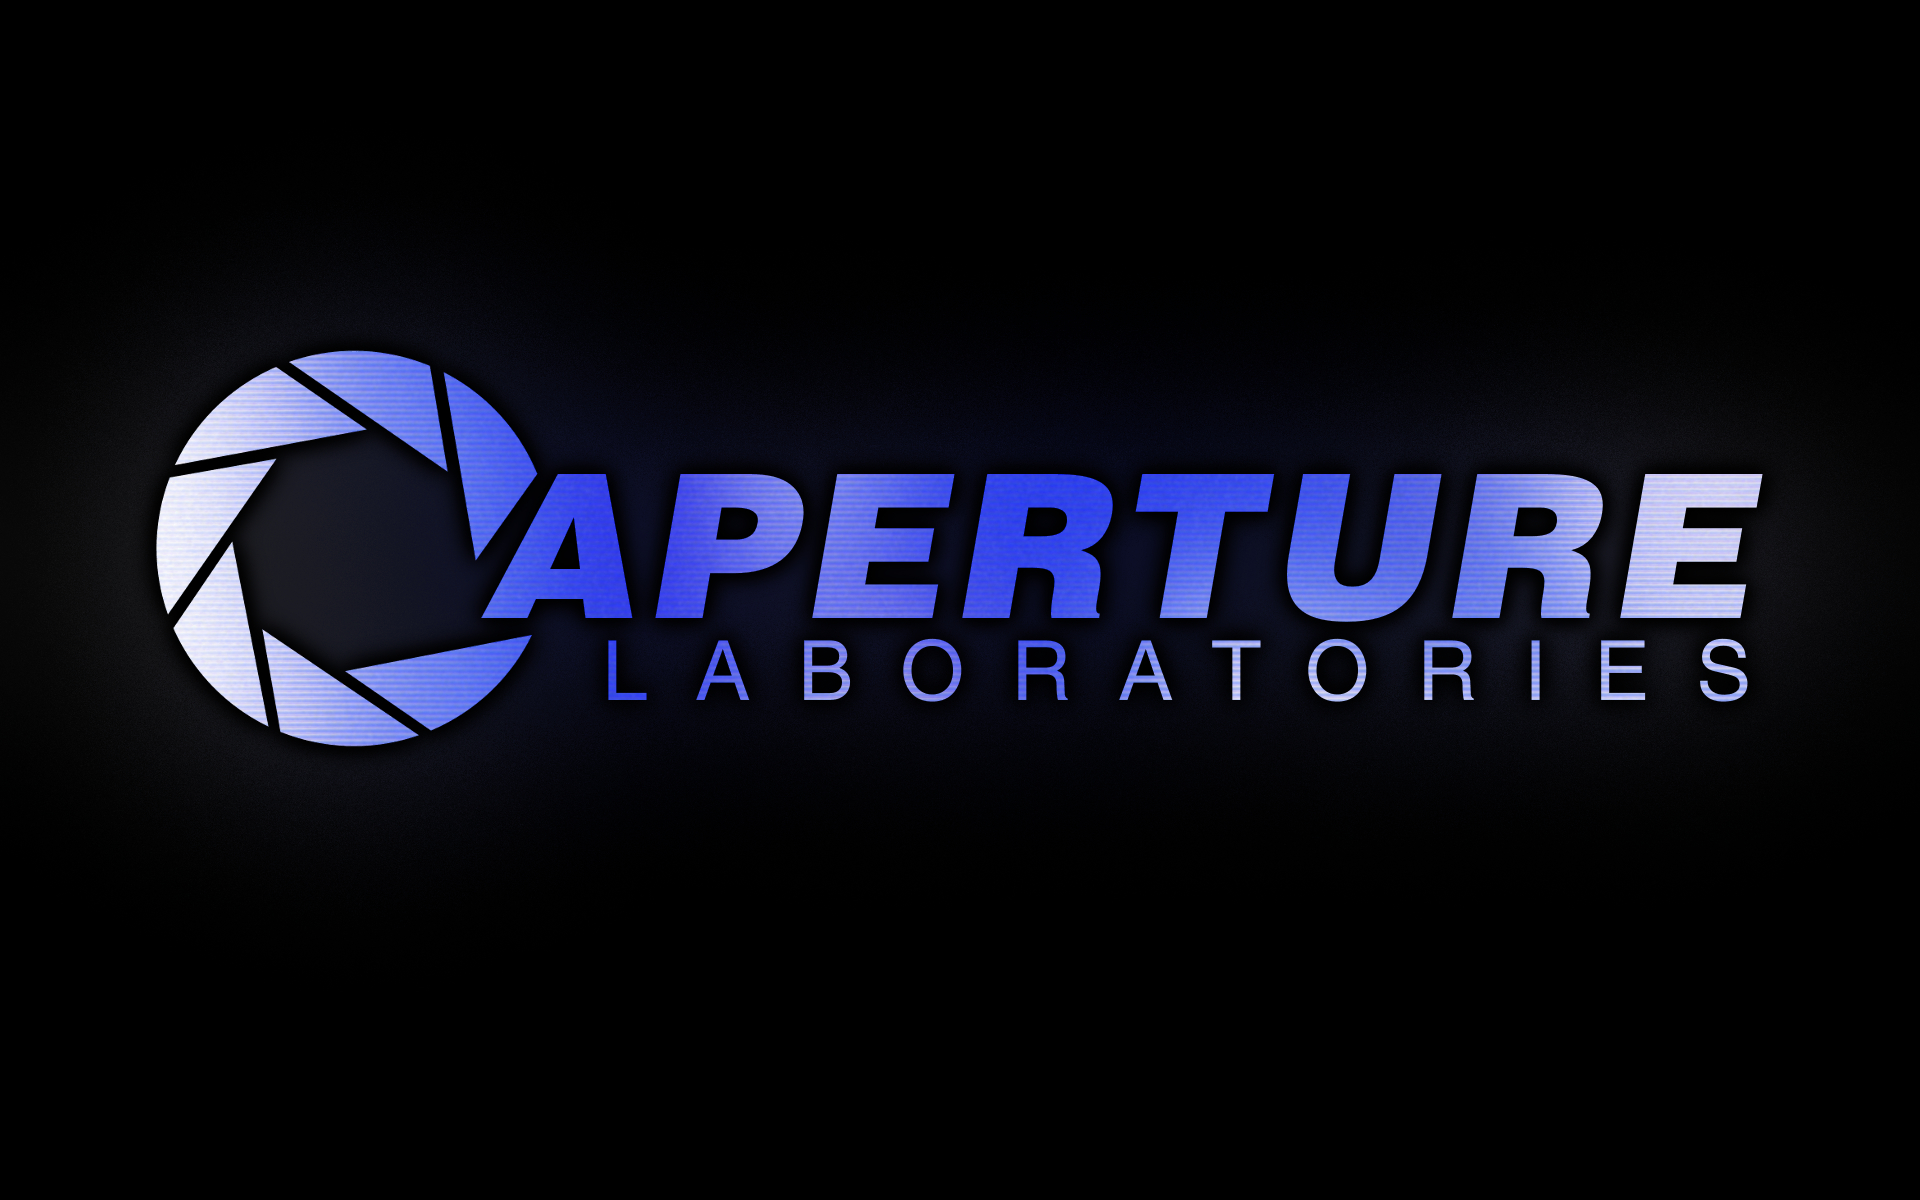 science portal aperture laboratories HD Wallpaper   Games 351818 1920x1200